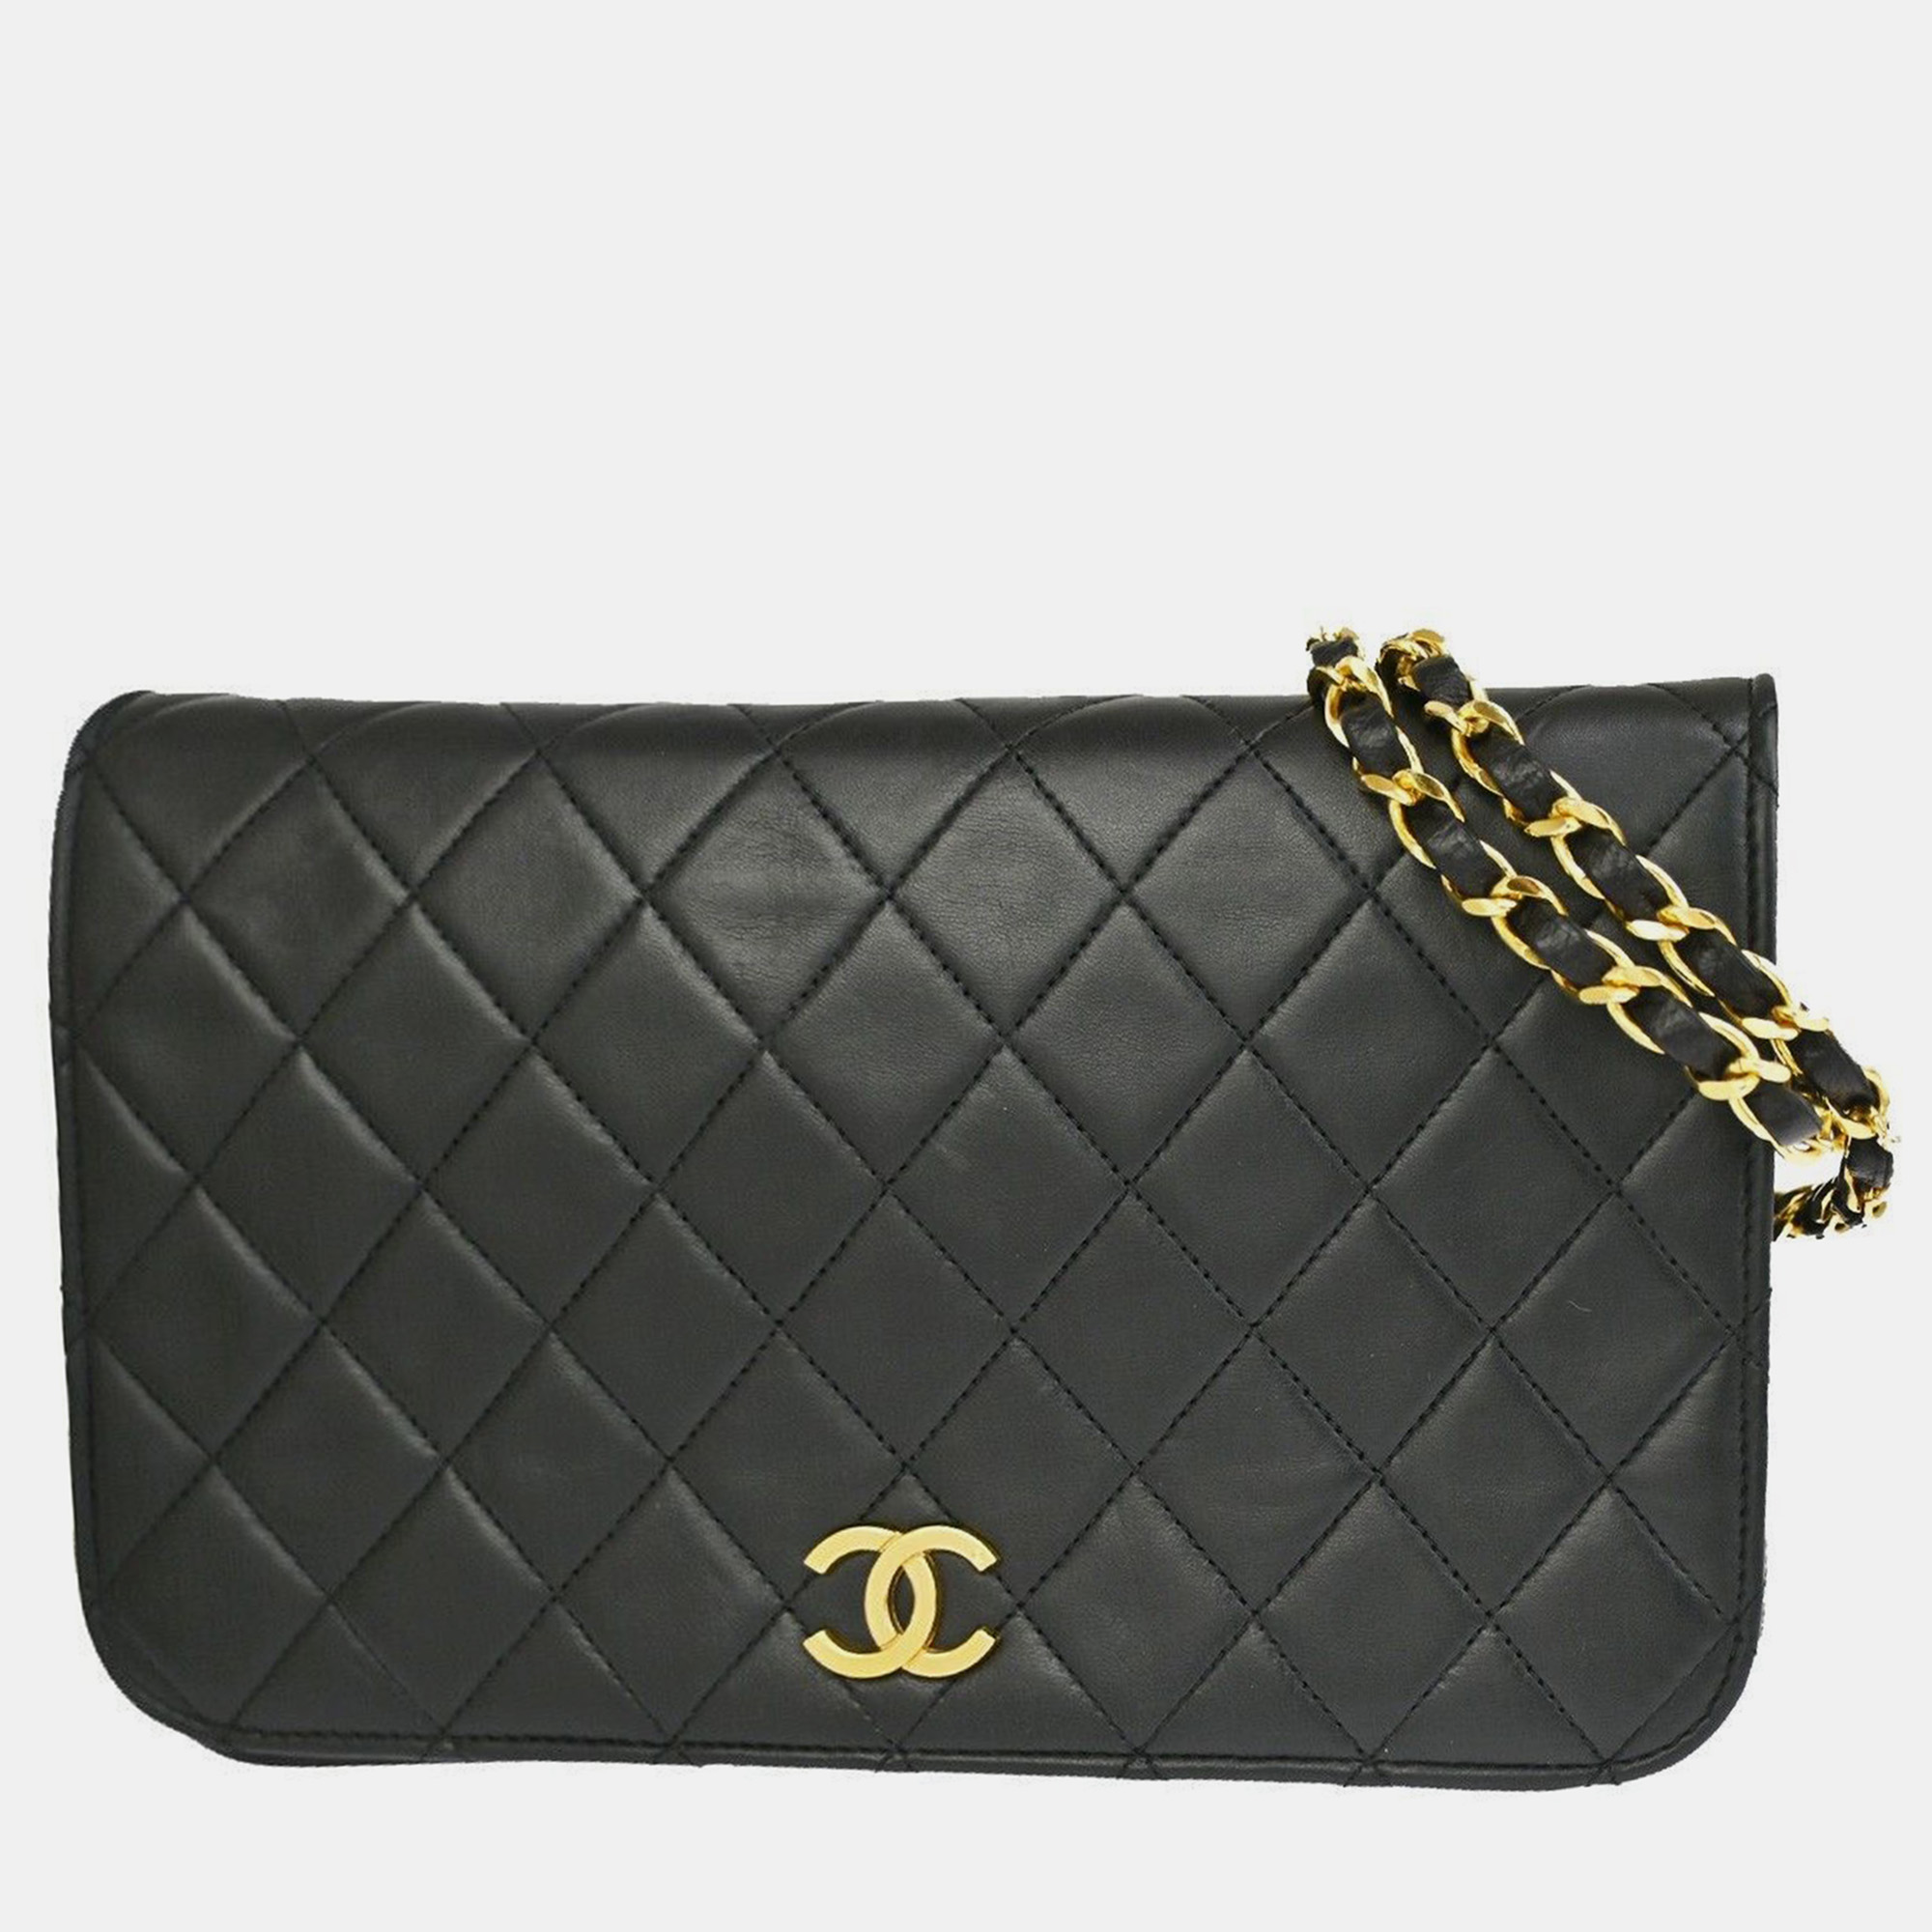 Chanel black quilted leather vintage full flap bag